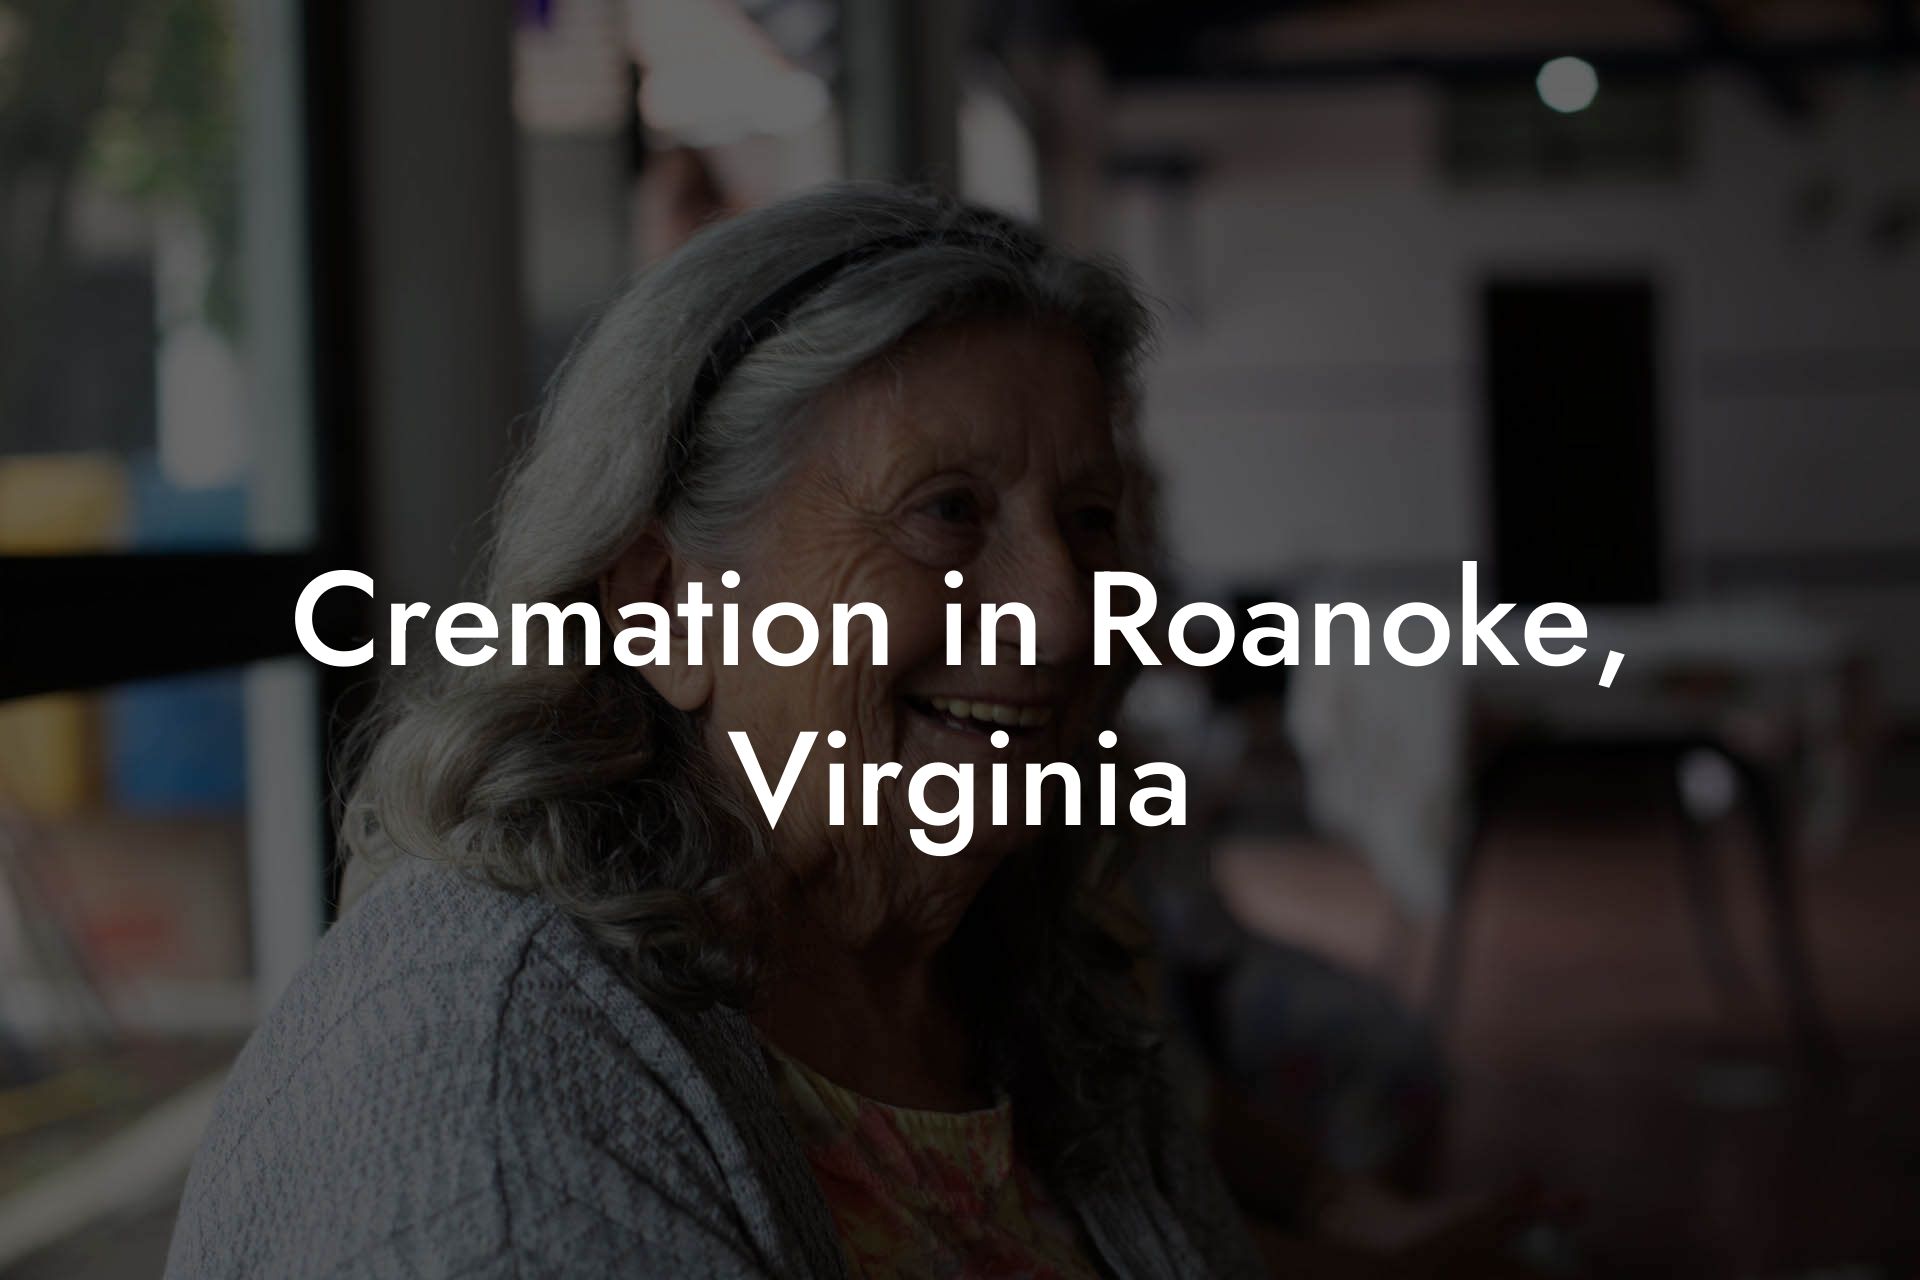 Cremation in Roanoke, Virginia